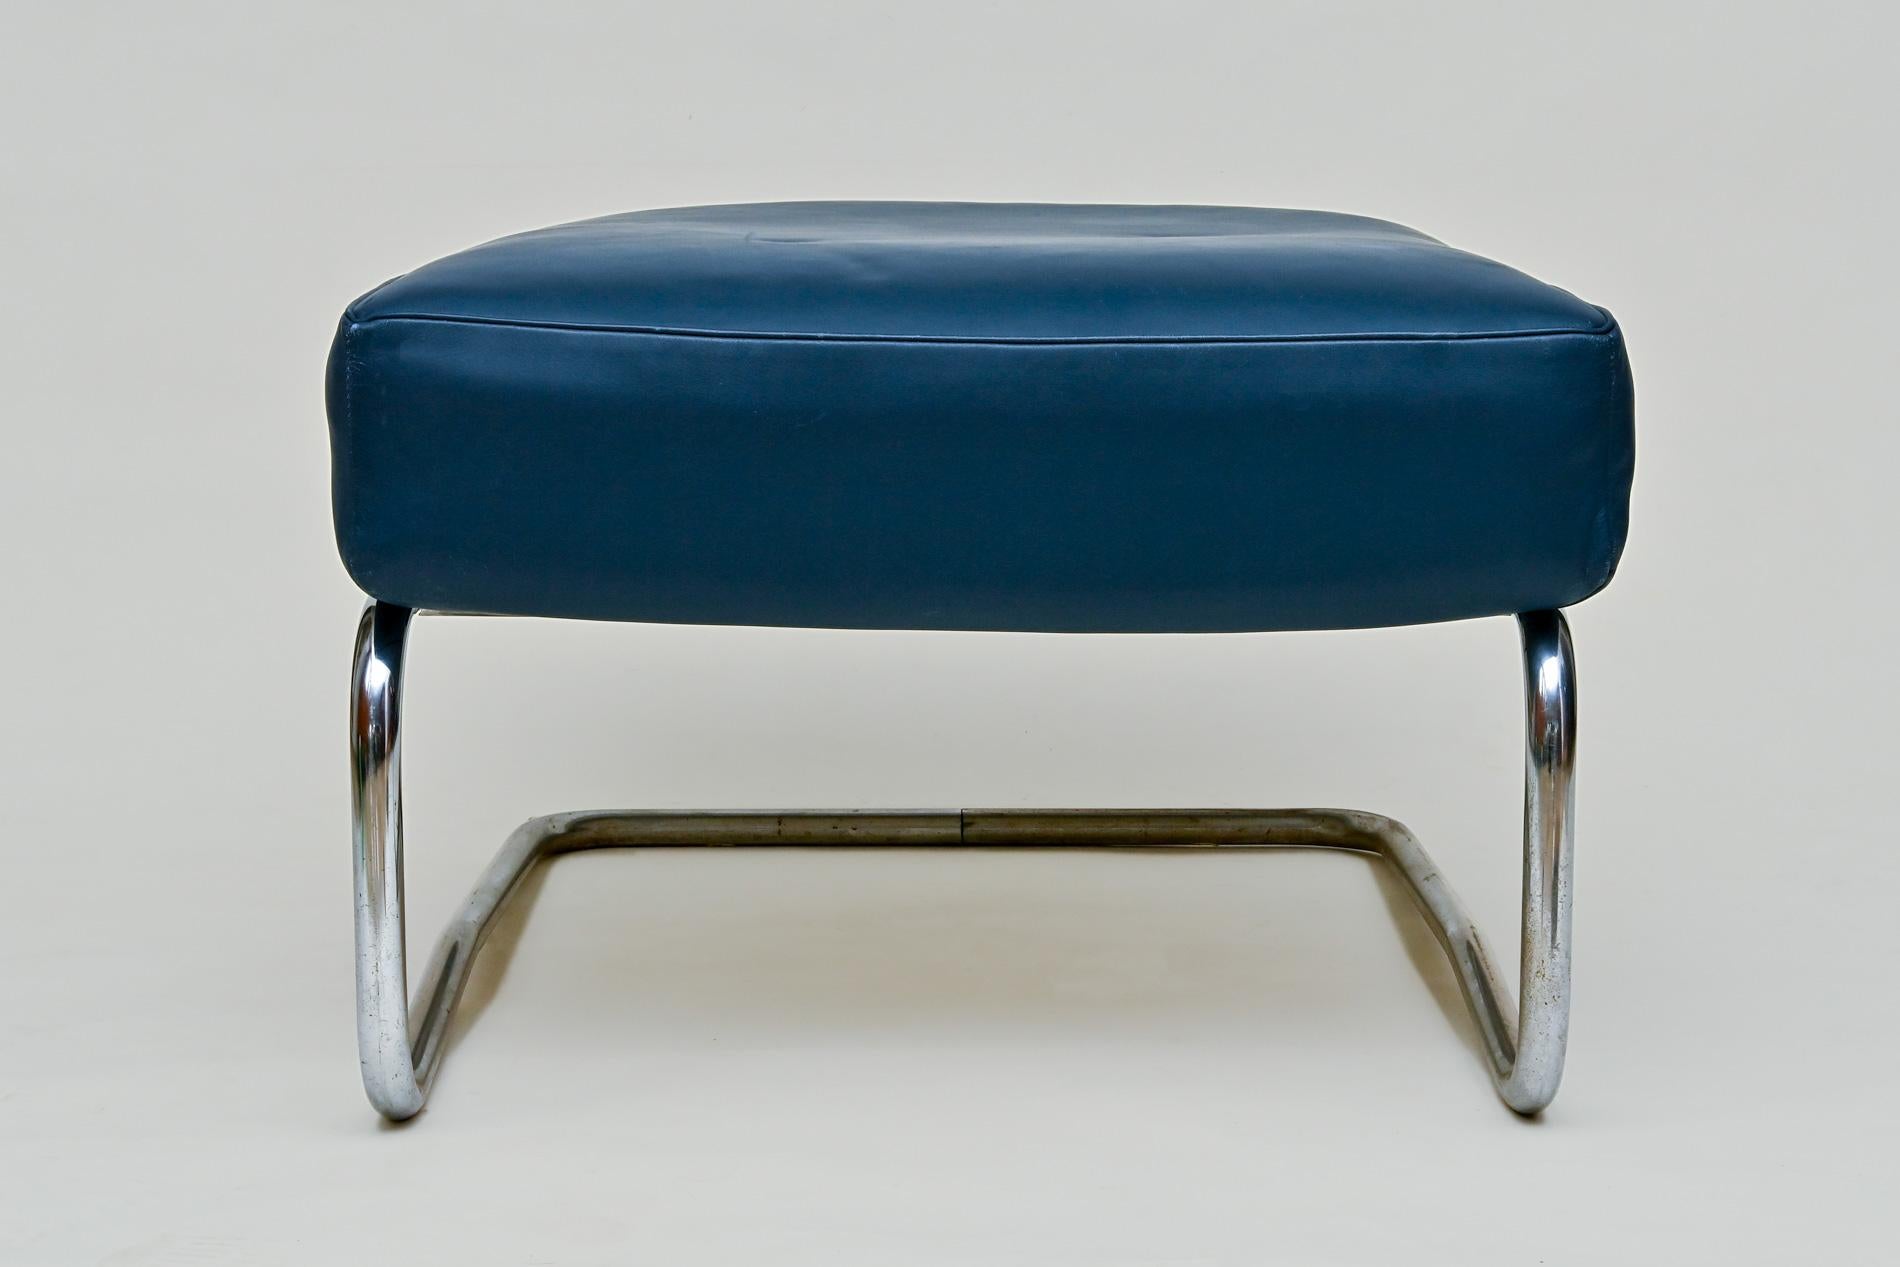 Bauhaus 20th Century Lounge Chair with Foot Stool Steel Furniture German Desta Berlin